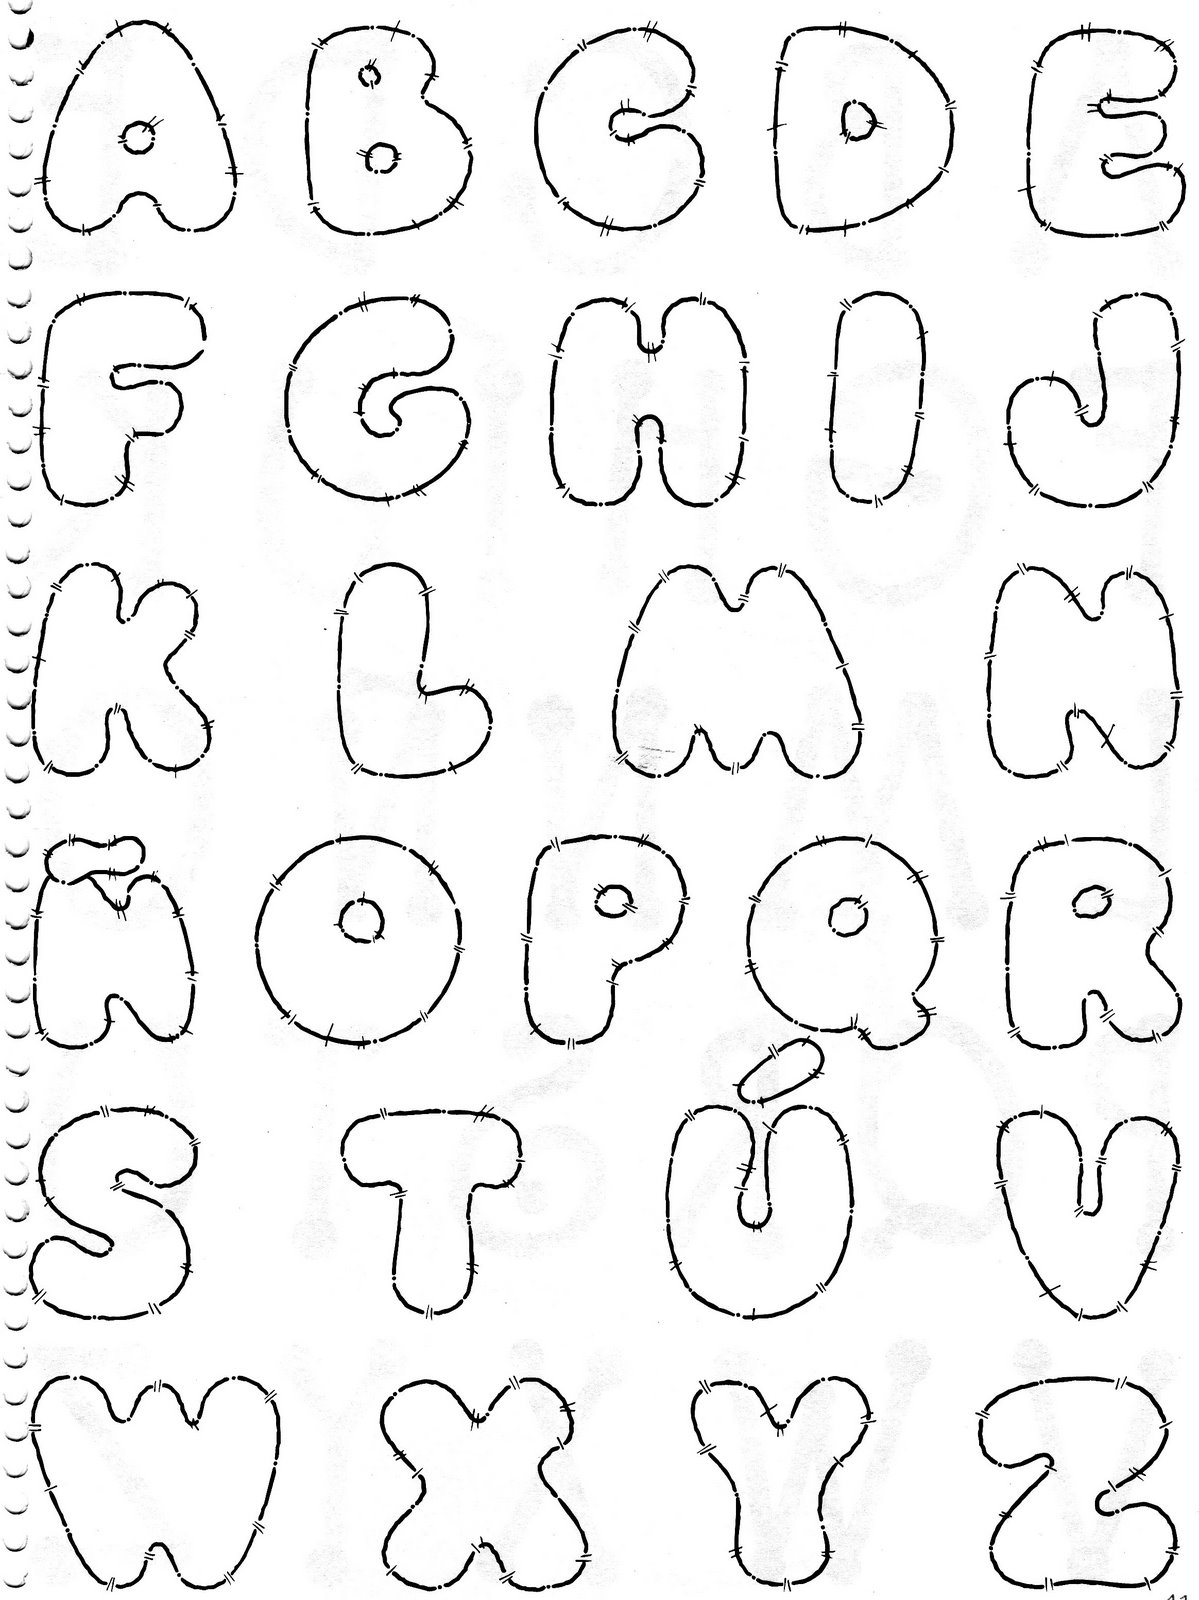 Professora Juce: Molde de letras para o Painel do Alfabeto